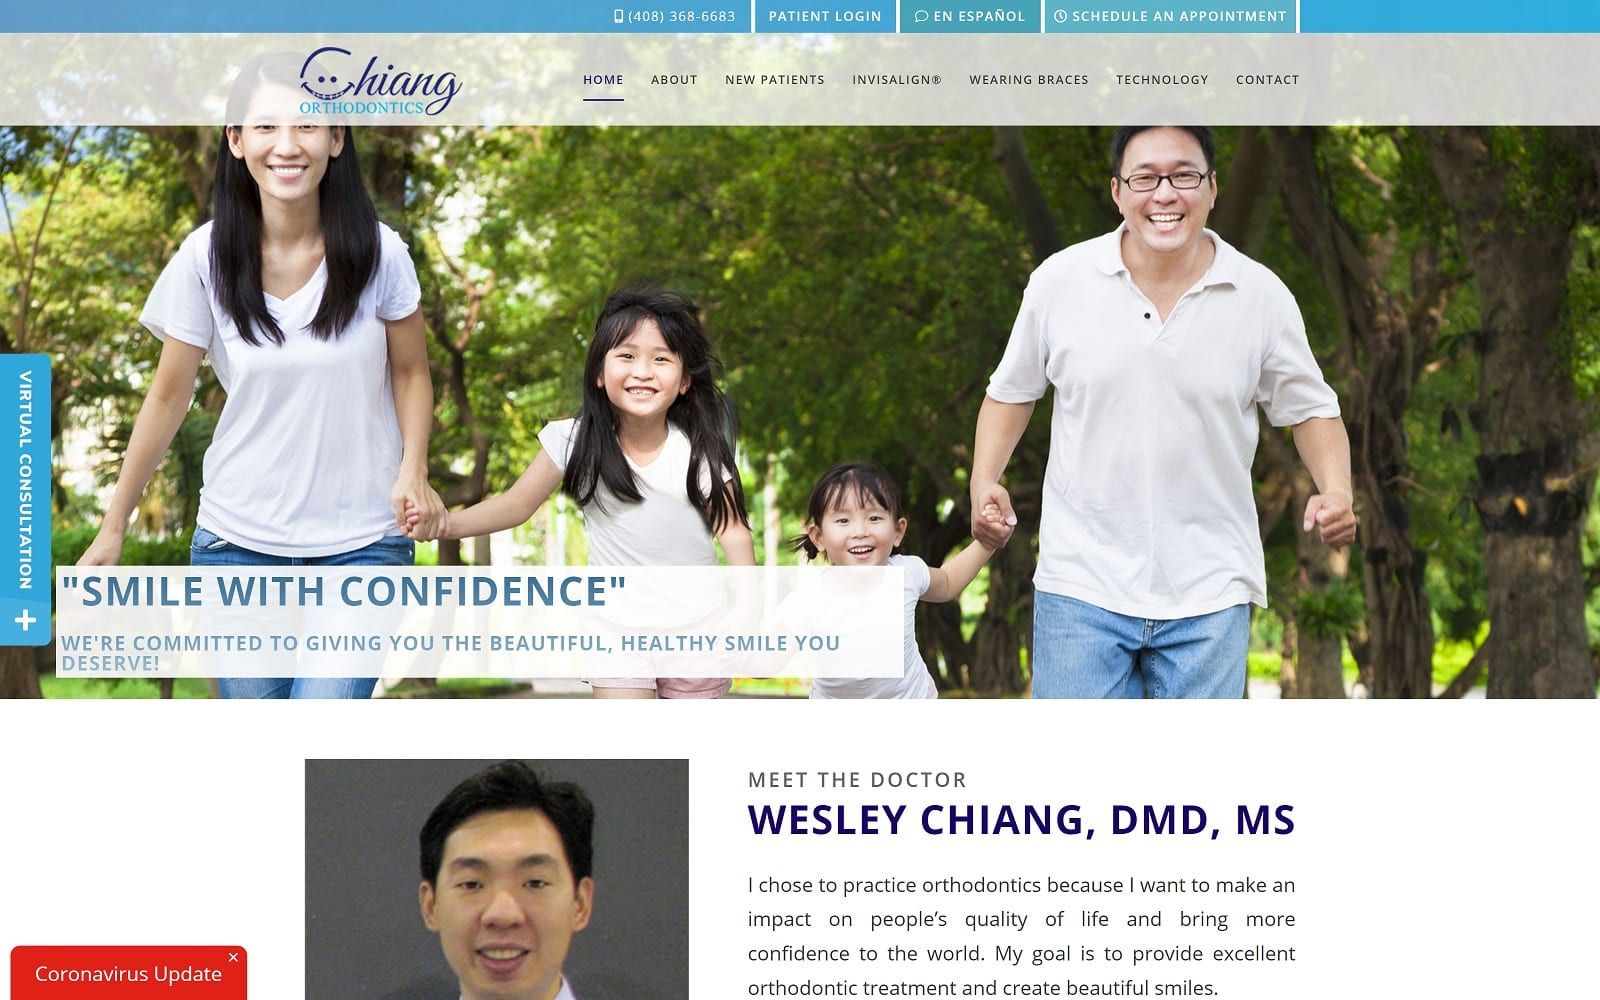 The screenshot of chiang orthodontics chiangortho. Com dr. Wesley chiang website